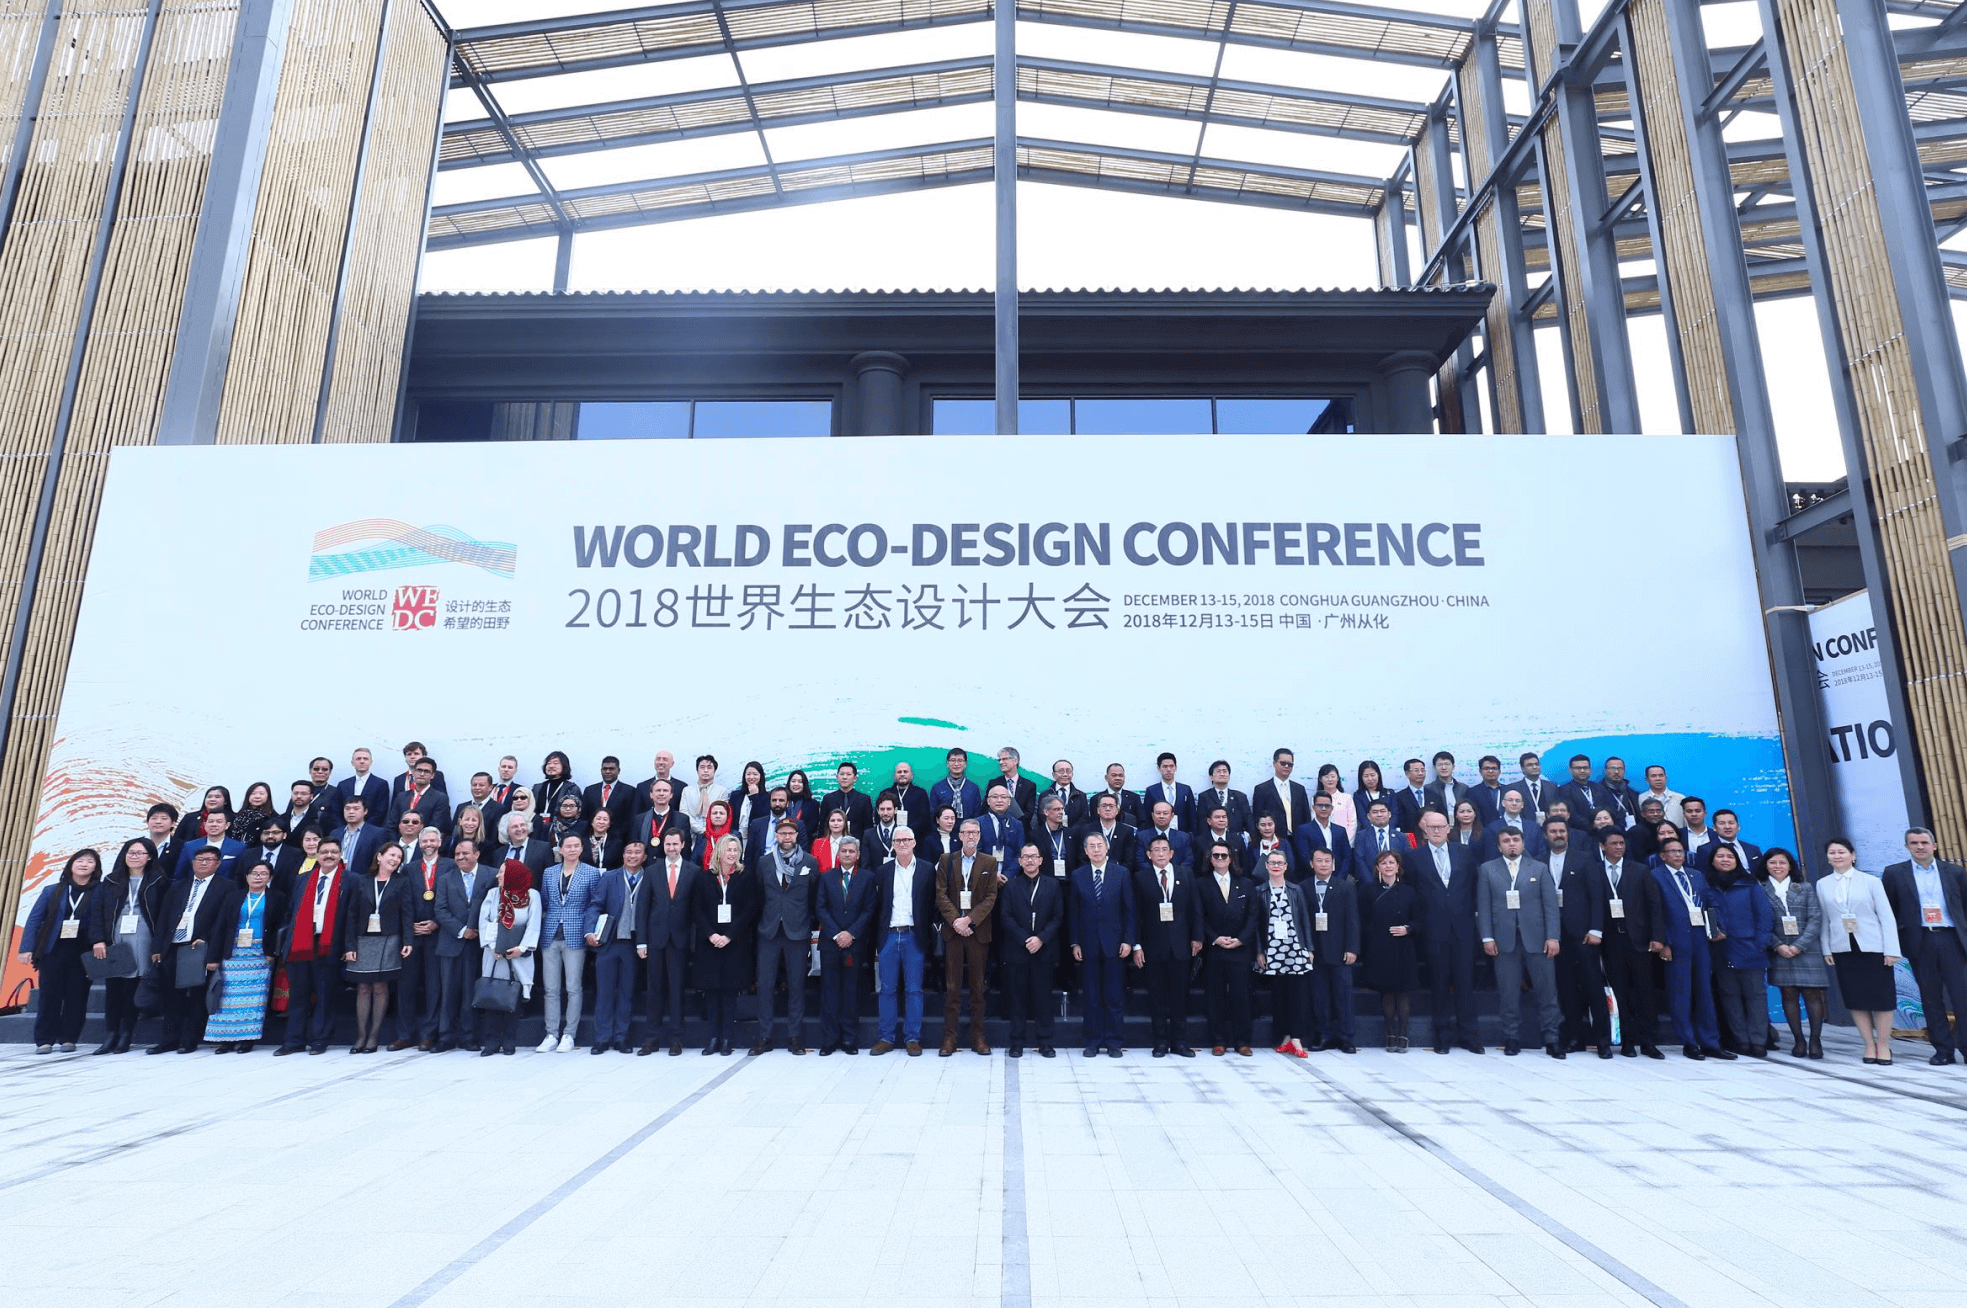 World Eco-Design Conference 2018